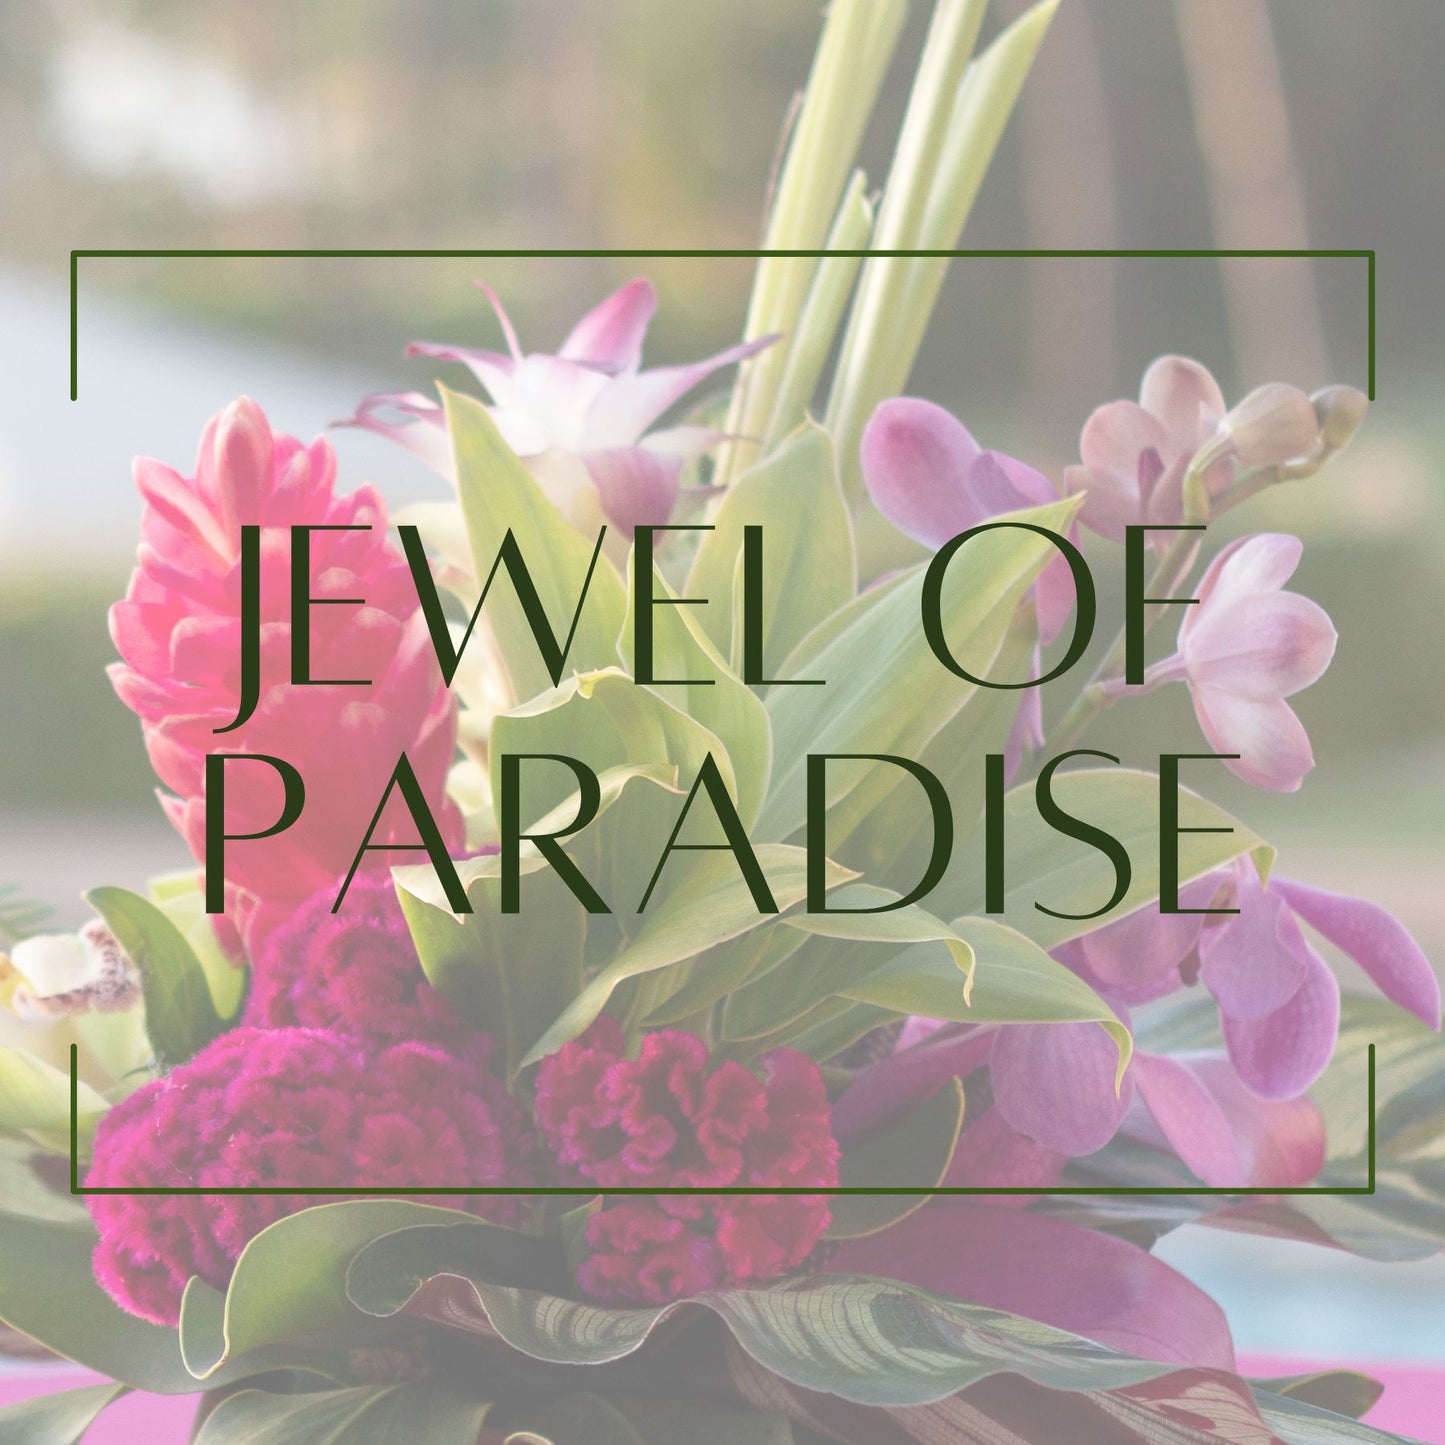 Jewel of Paradise - Stage Decor